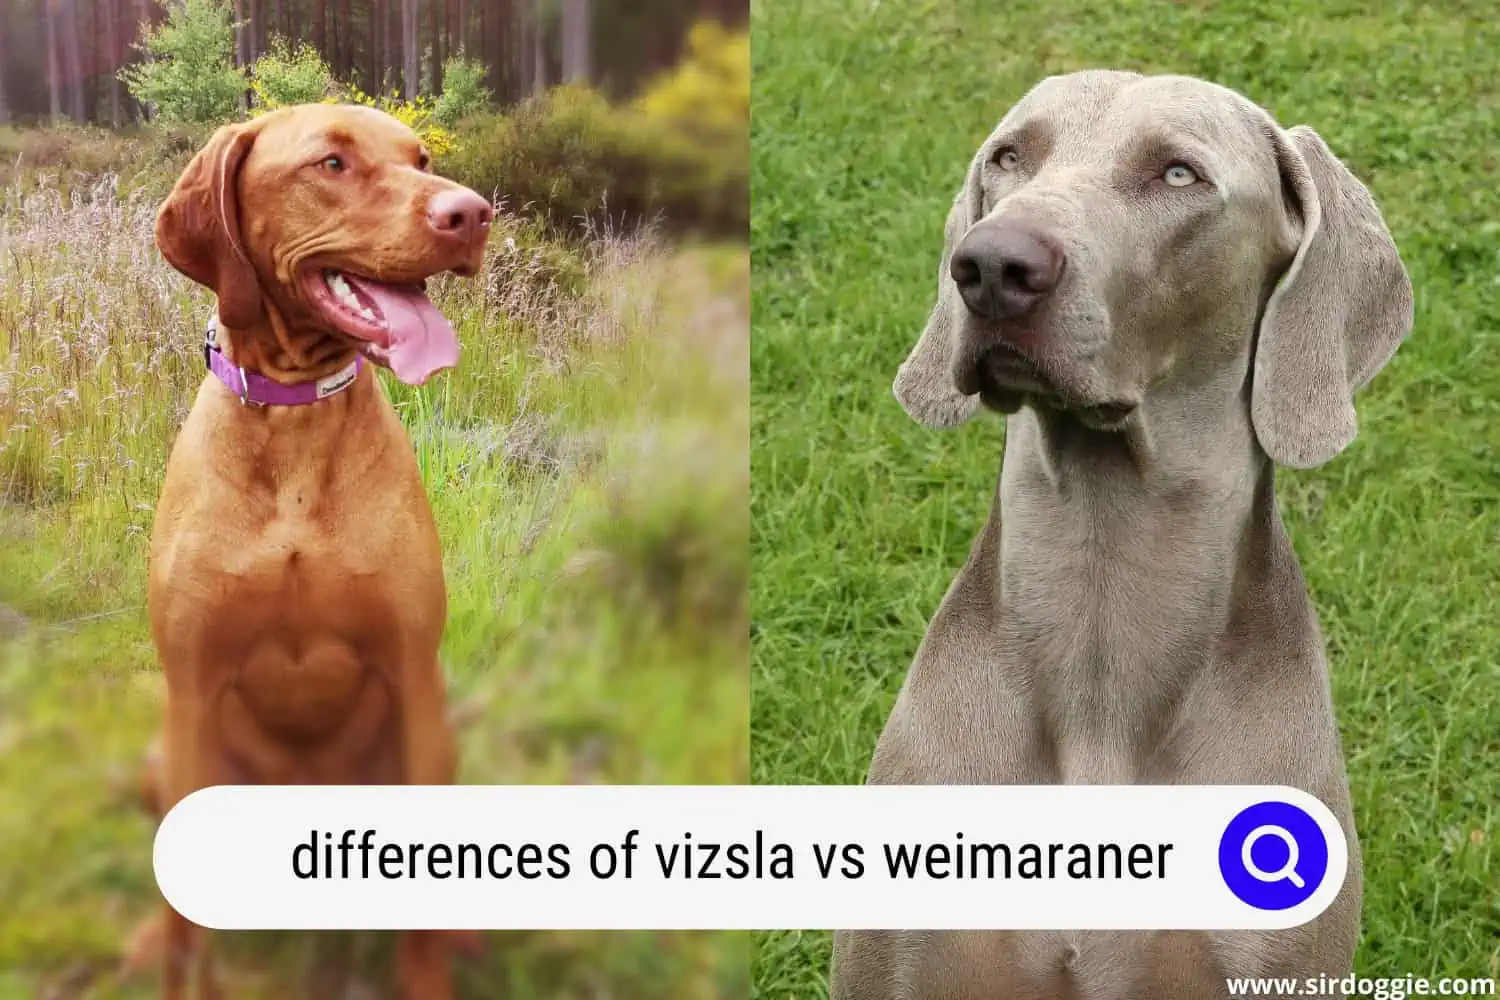 Vizsla and Weimaraner dog